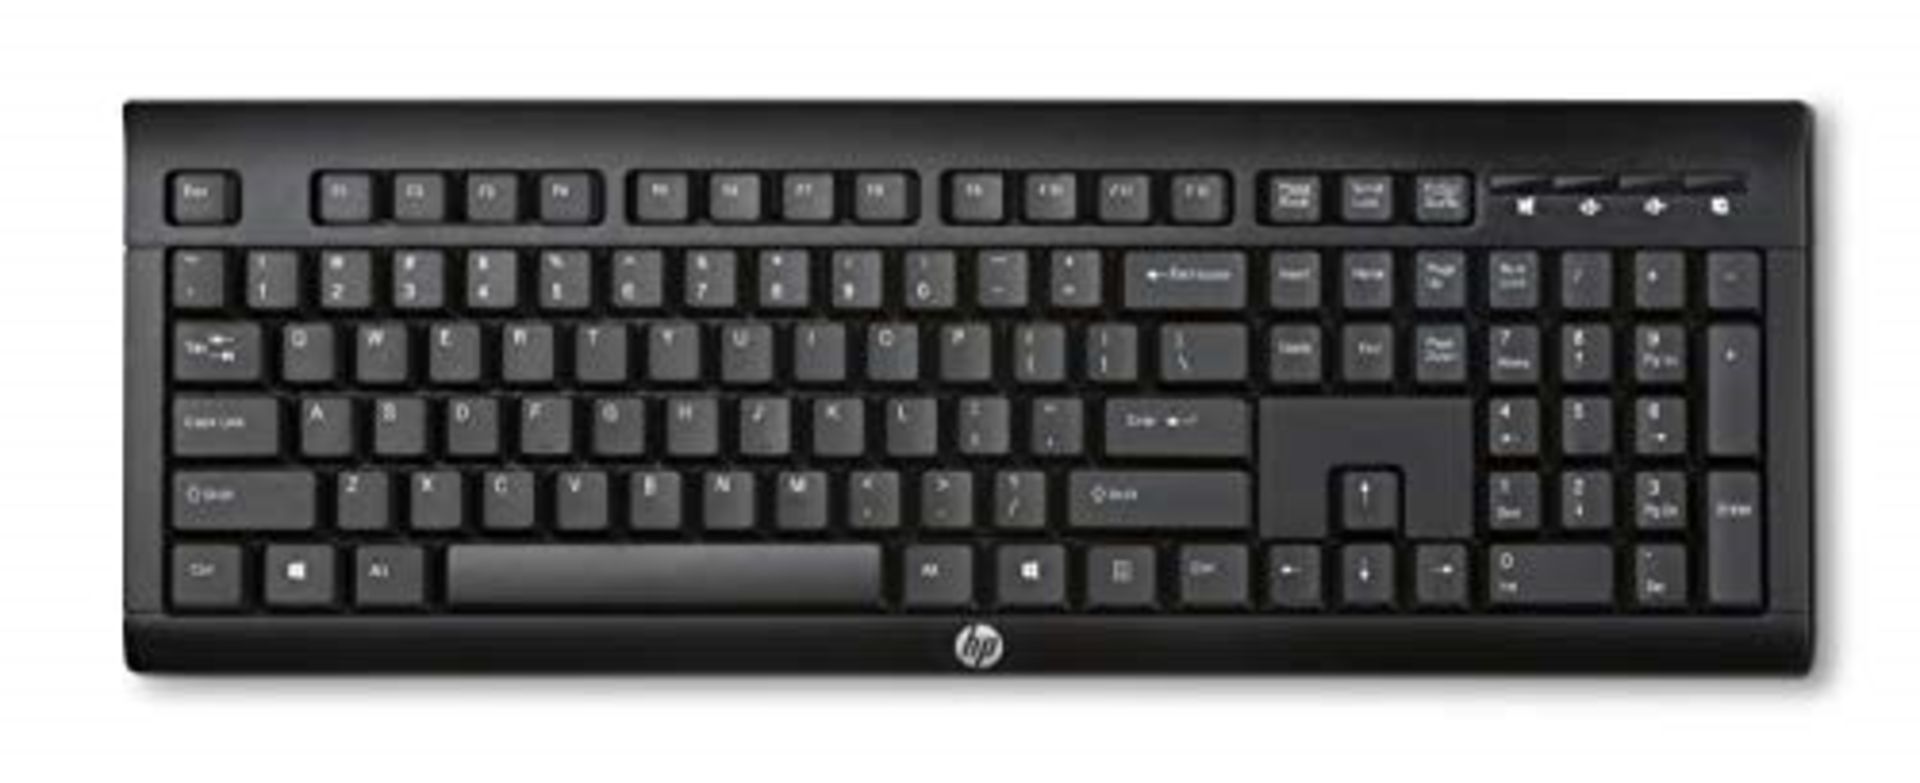 HP K2500 Black 2.4 GHz USB Wireless Keyboard